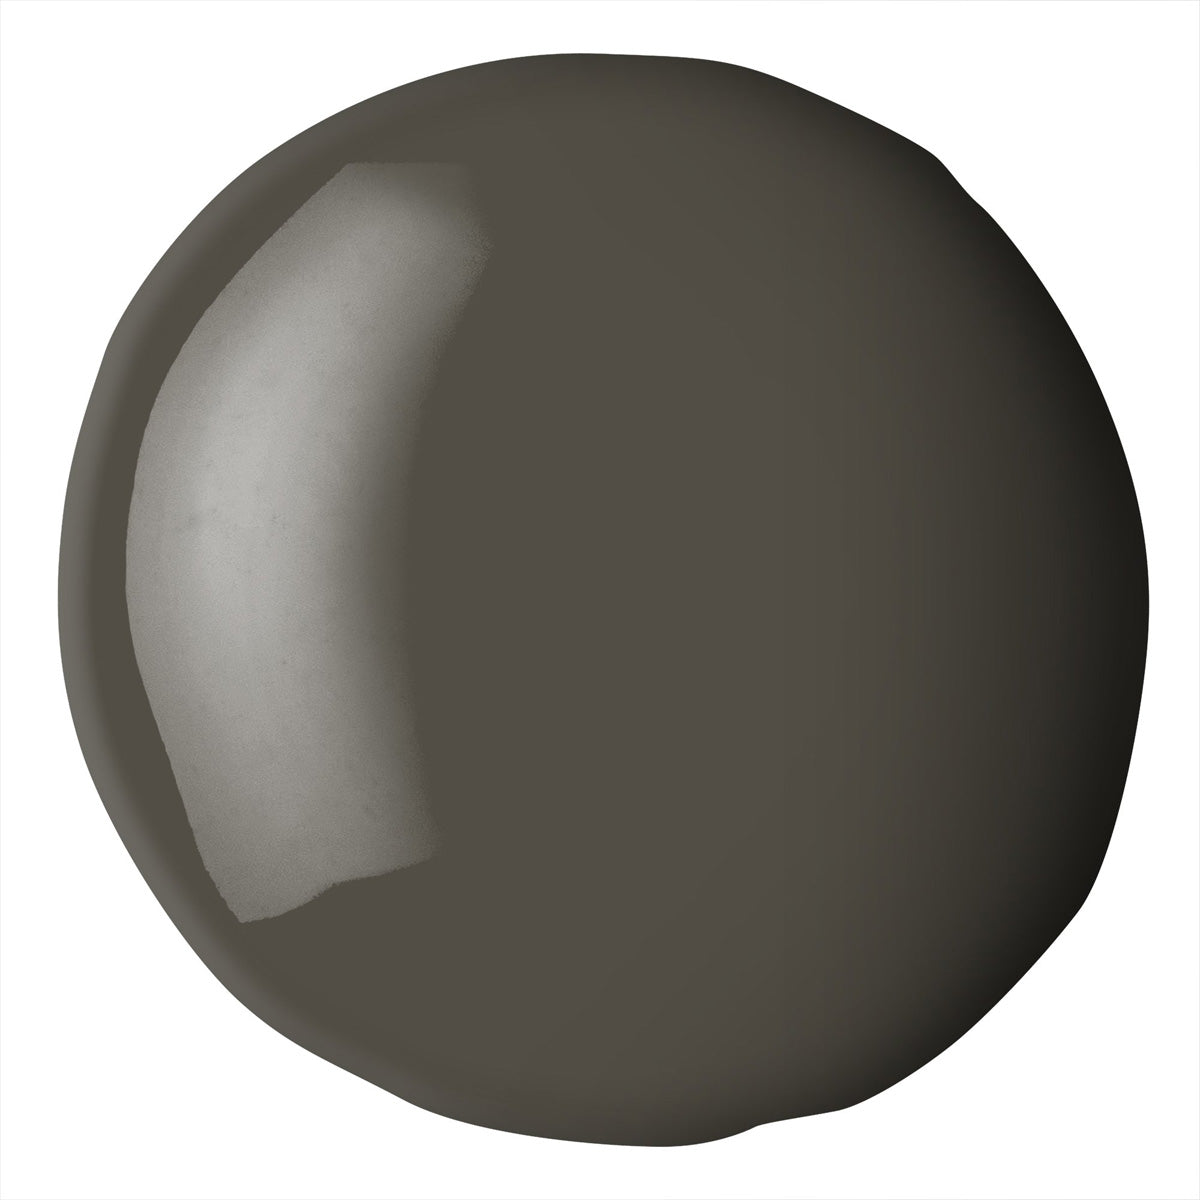 Liquitex Basics Acrylique Fluide 118ml - Terre d’ombre brute S1